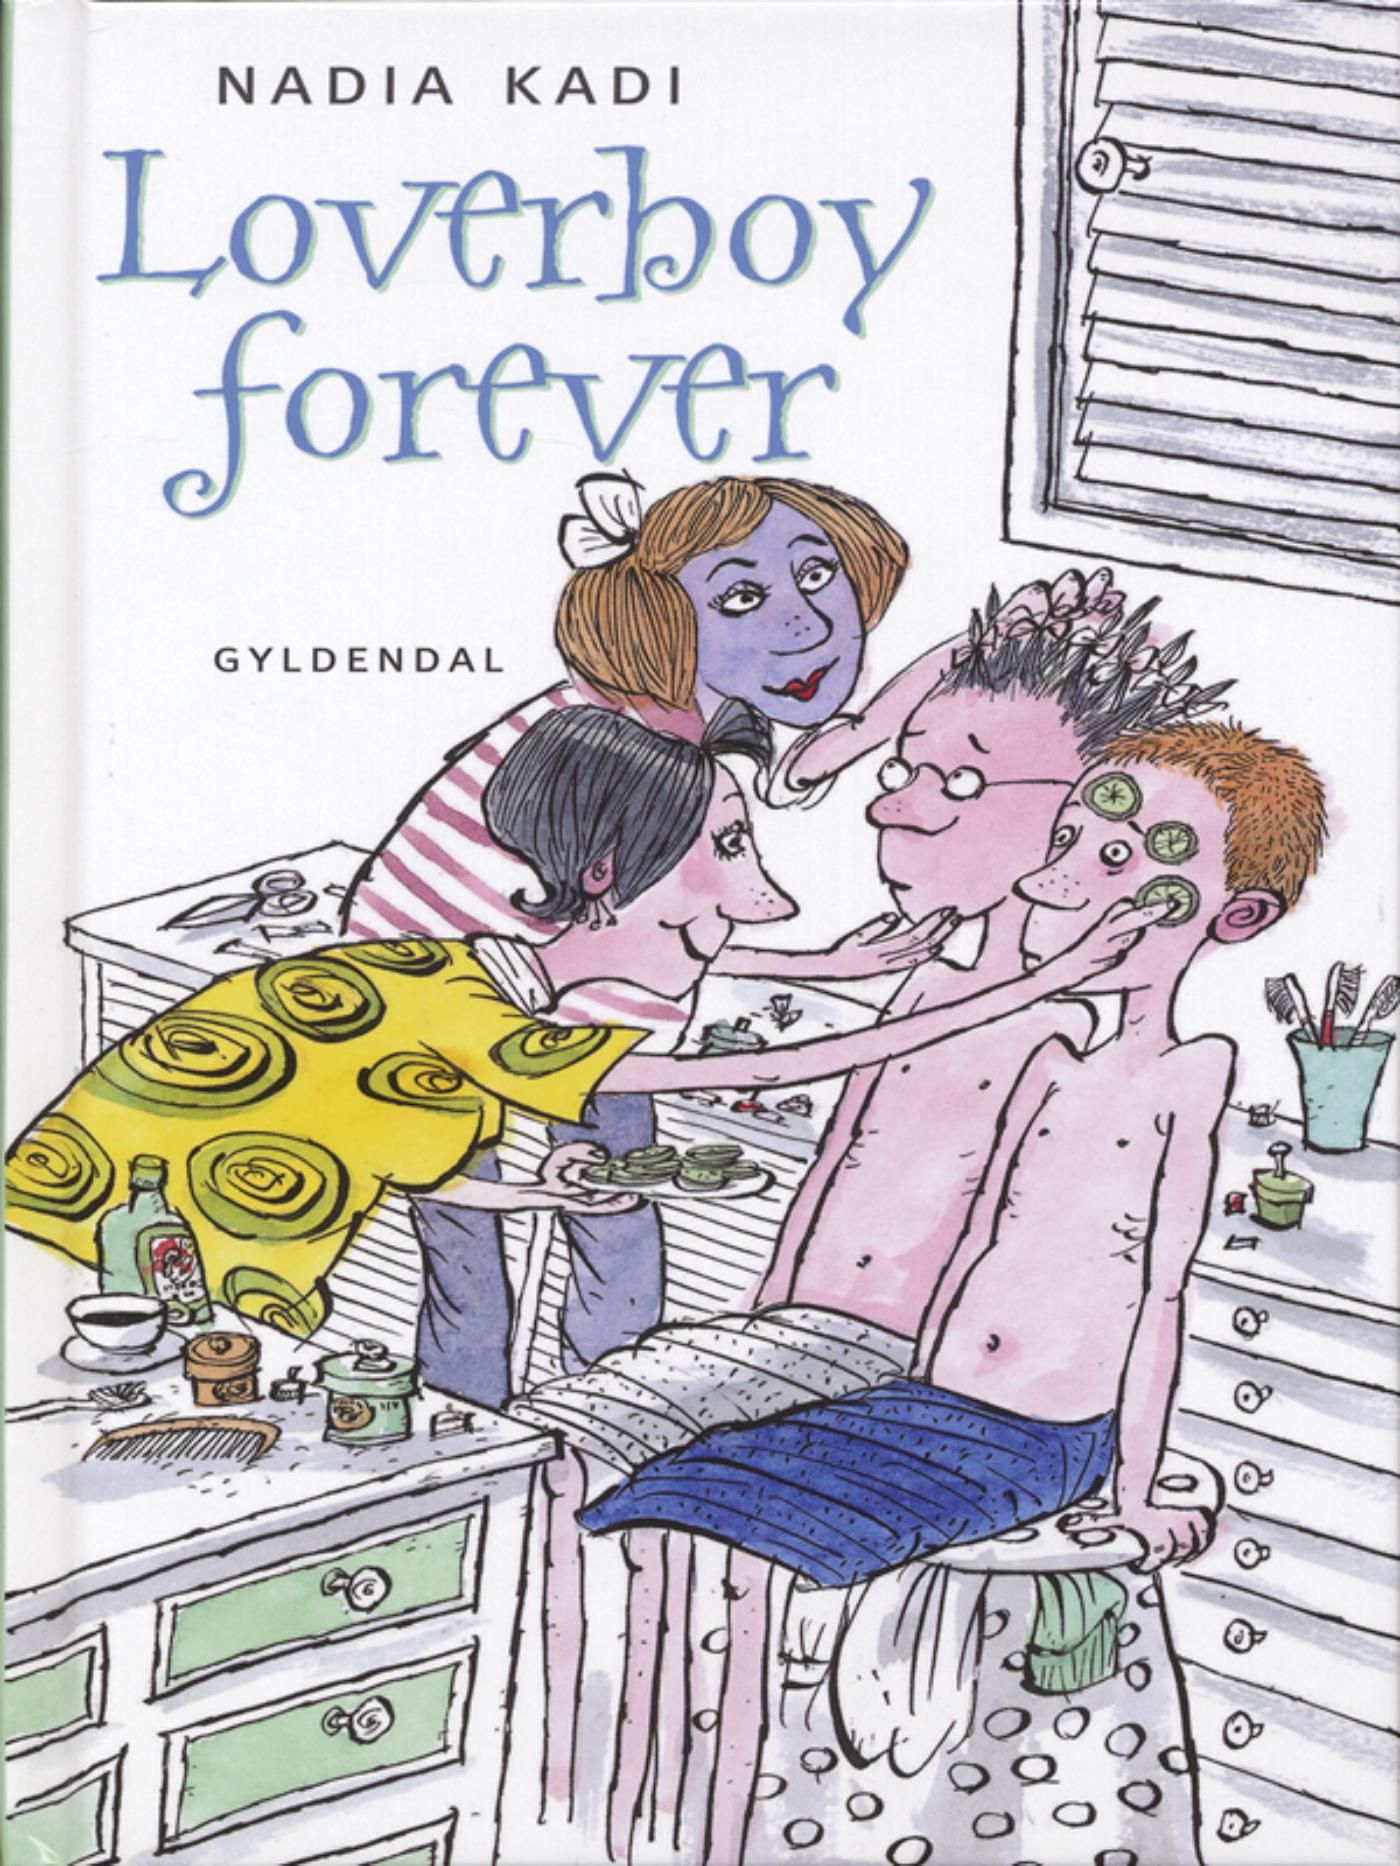 Loverboy forever, eBook by Nadia Kadi